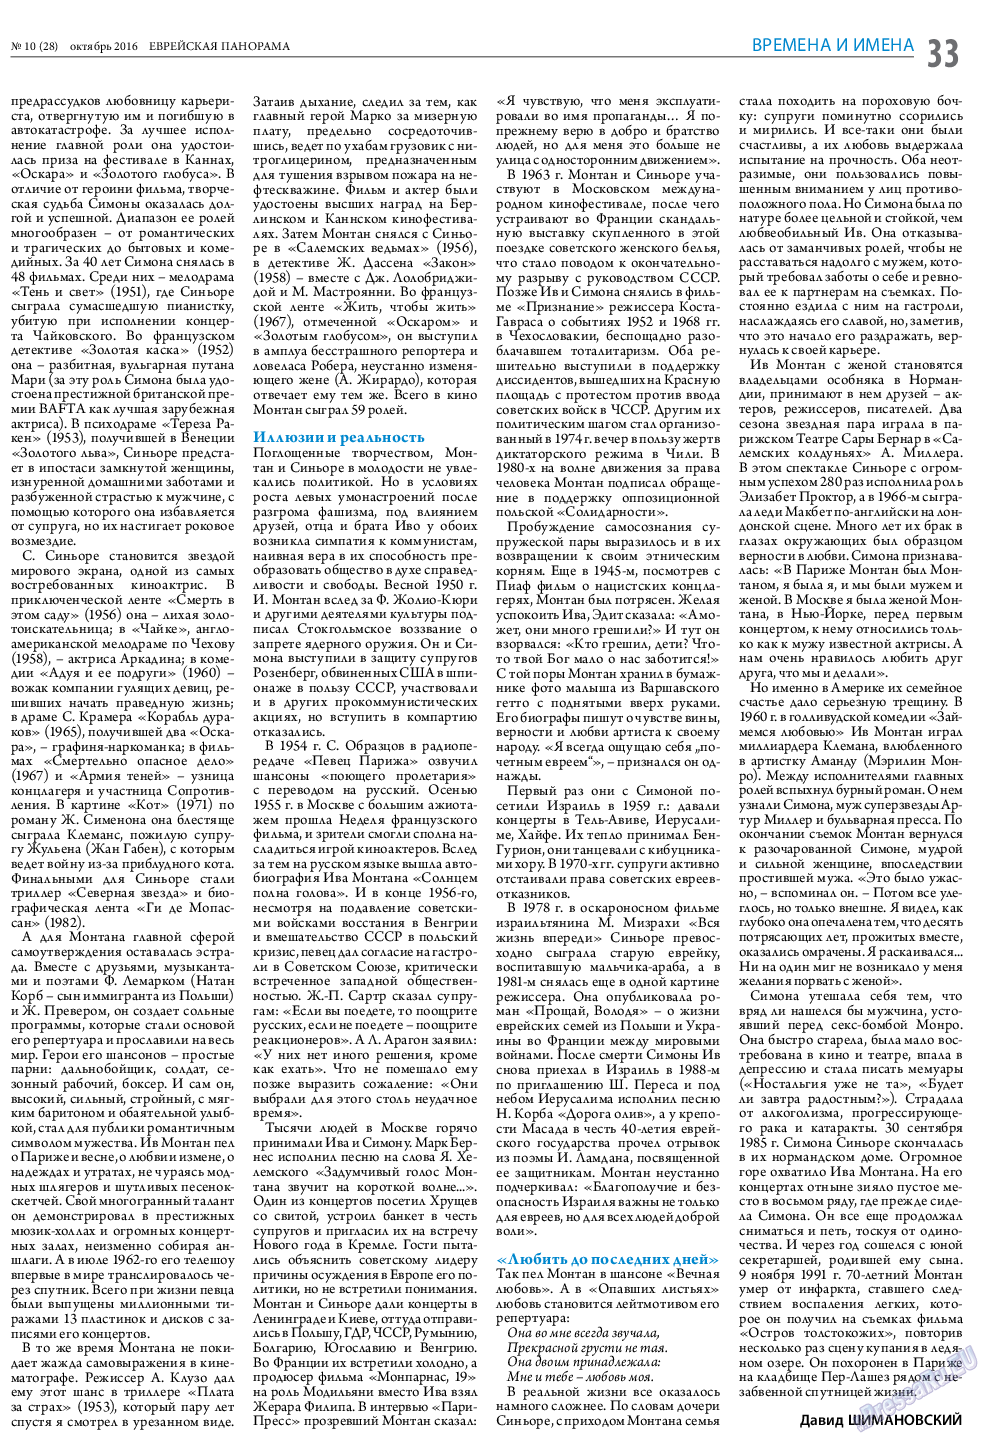 Еврейская панорама, газета. 2016 №10 стр.33